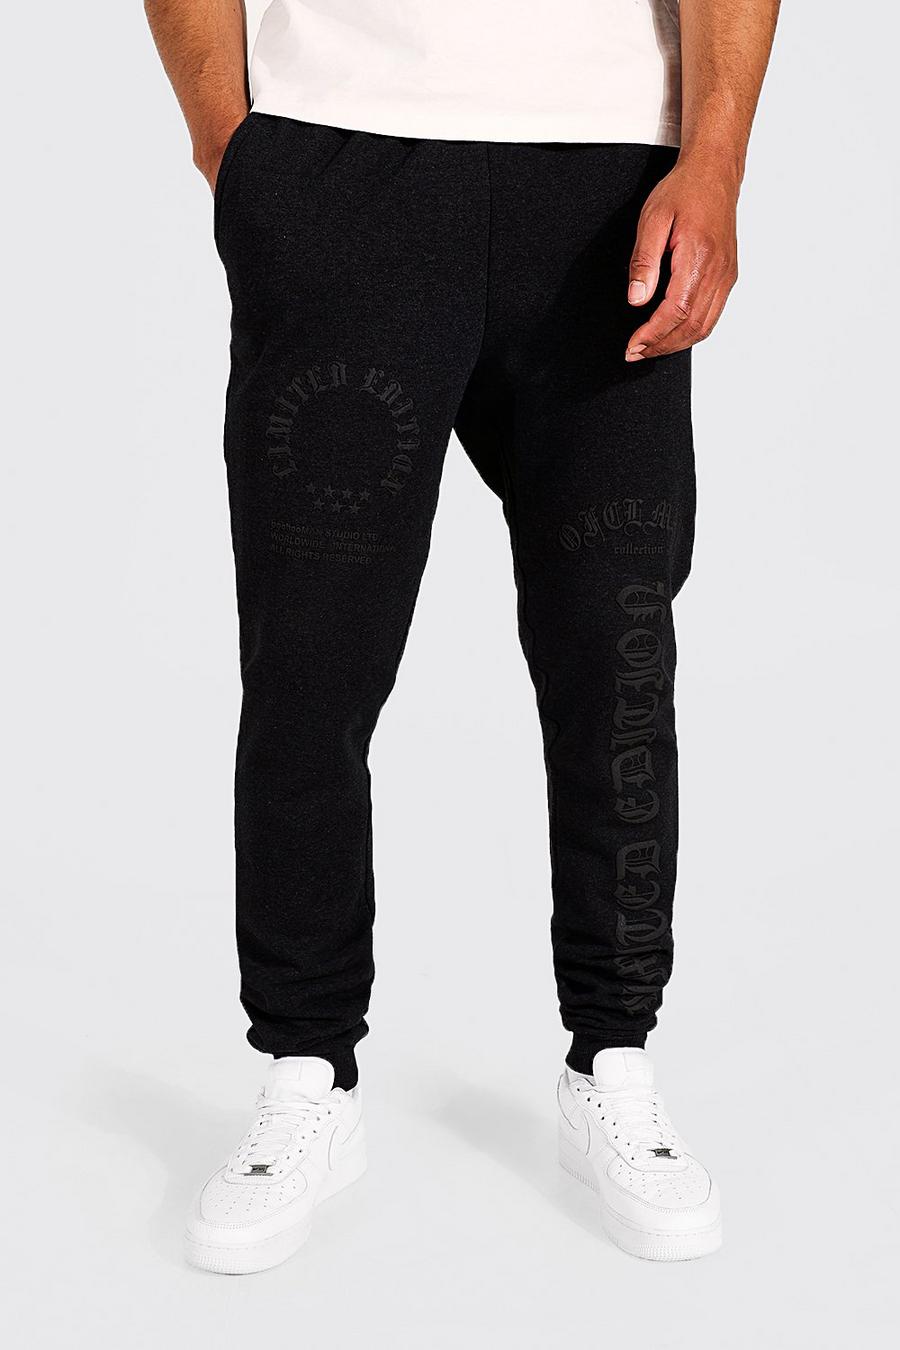 Pantaloni tuta Tall Limited Edition, Charcoal image number 1